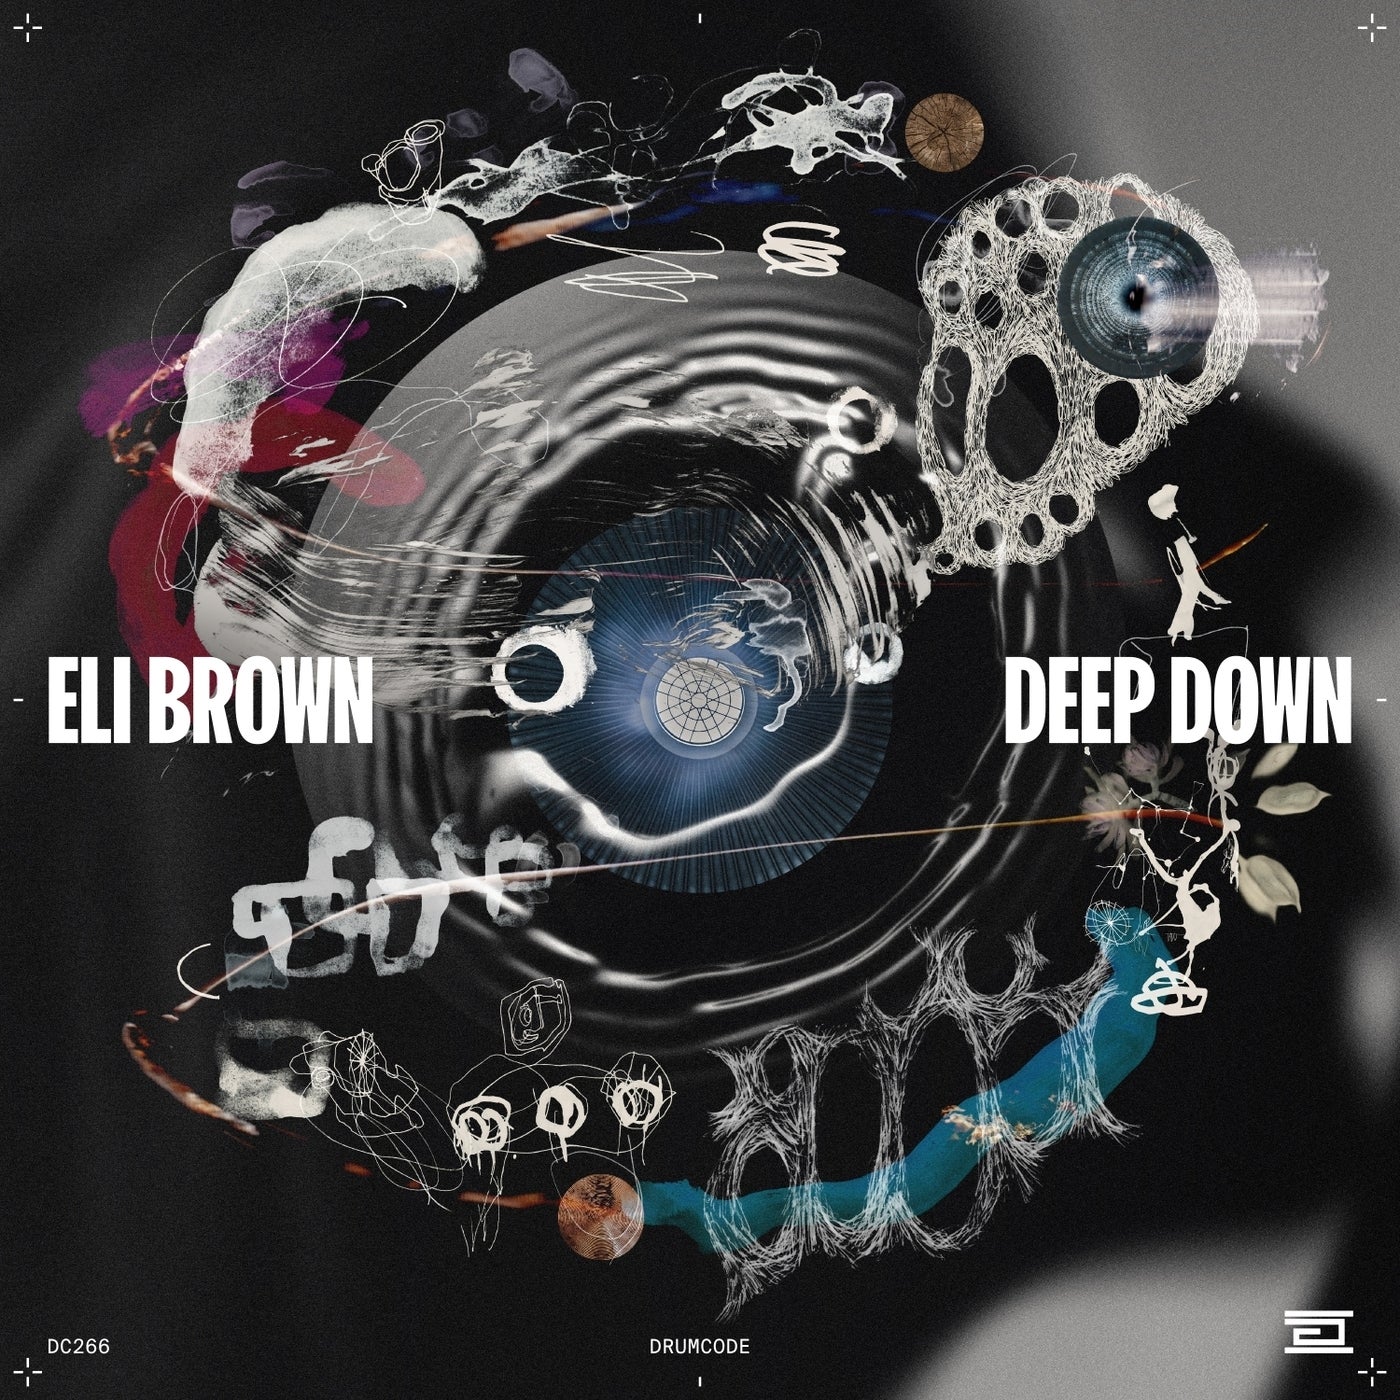 Deep Down (Original Mix)